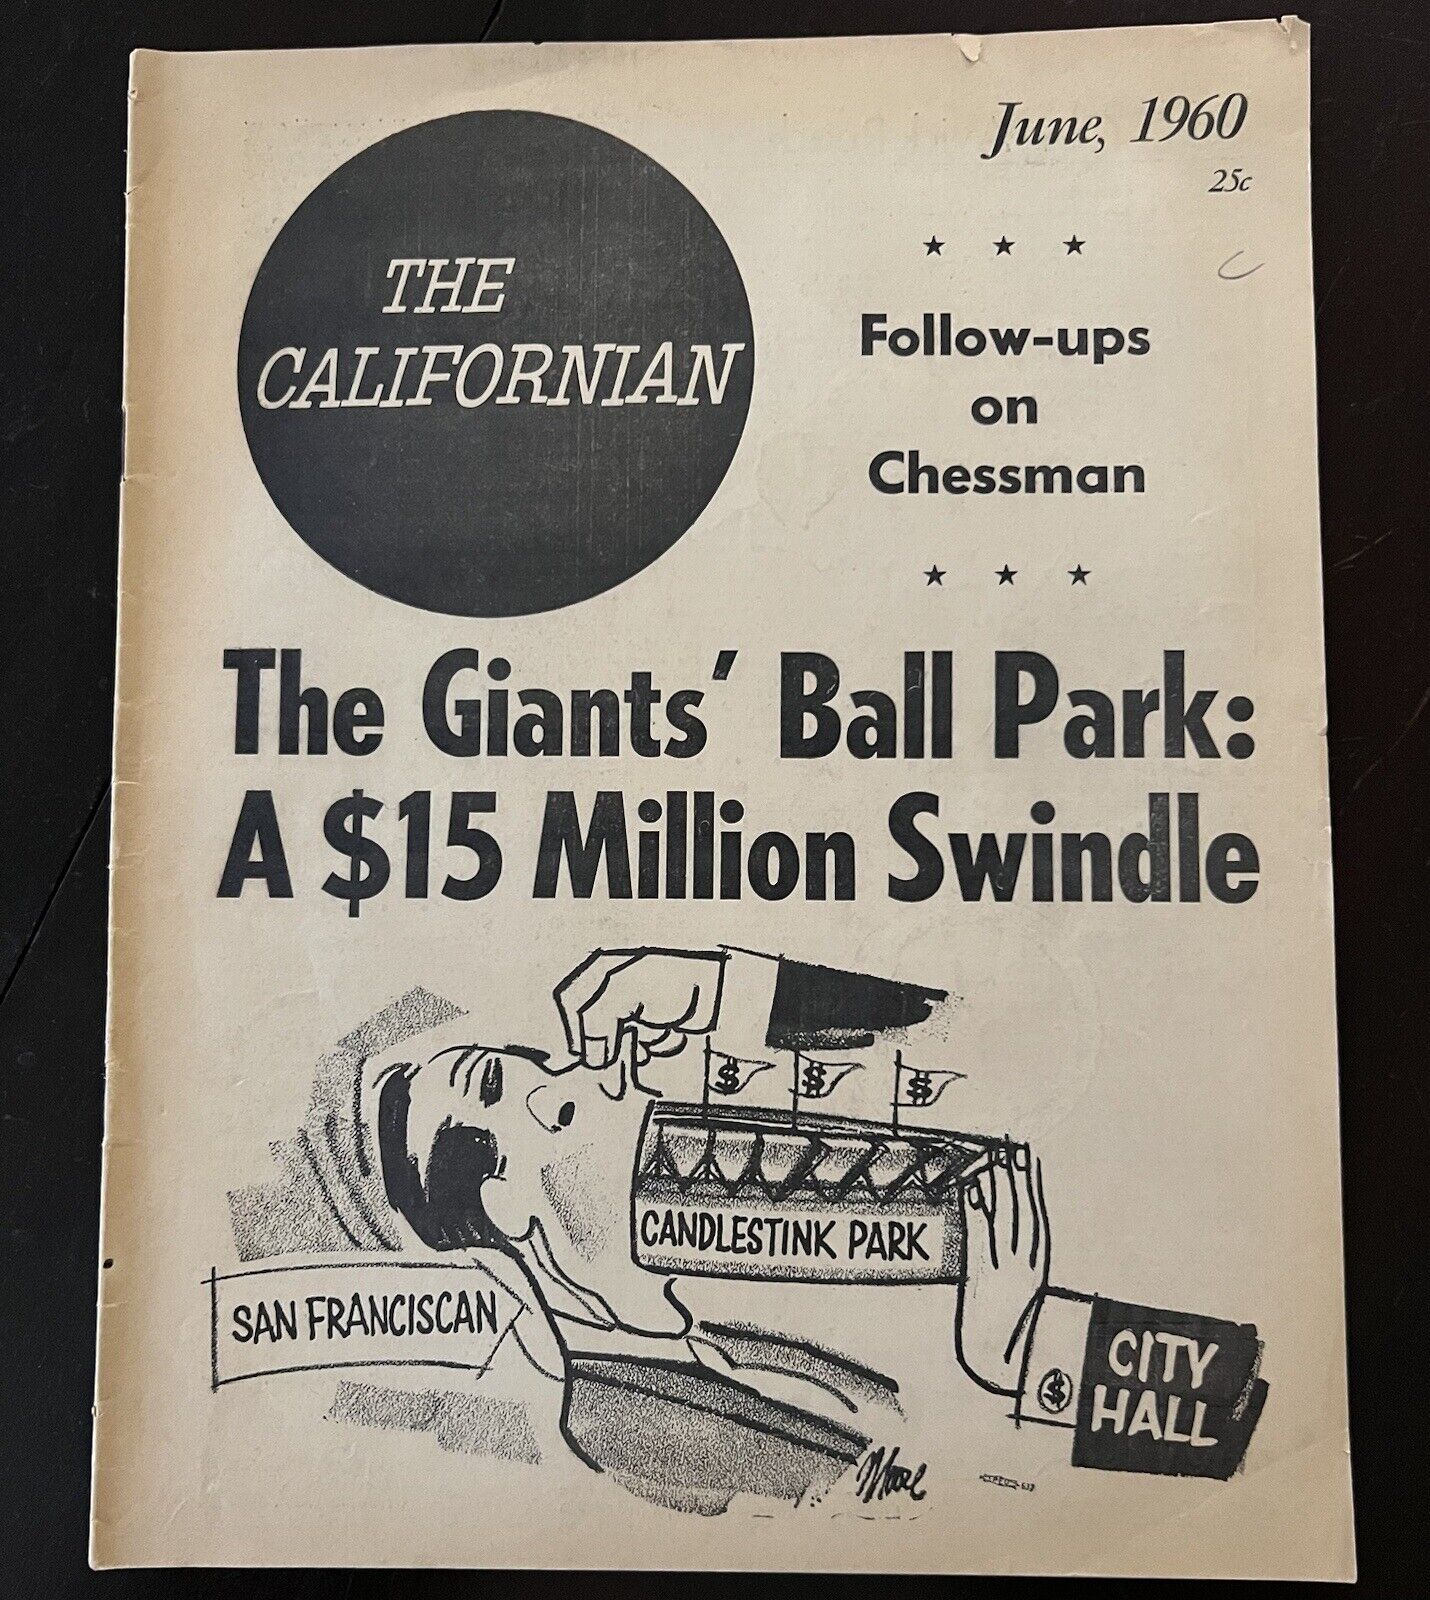 The Californian, Vol 1, No 5 June 1960 Giant’s Candlestick Ballpark $15M Swindle